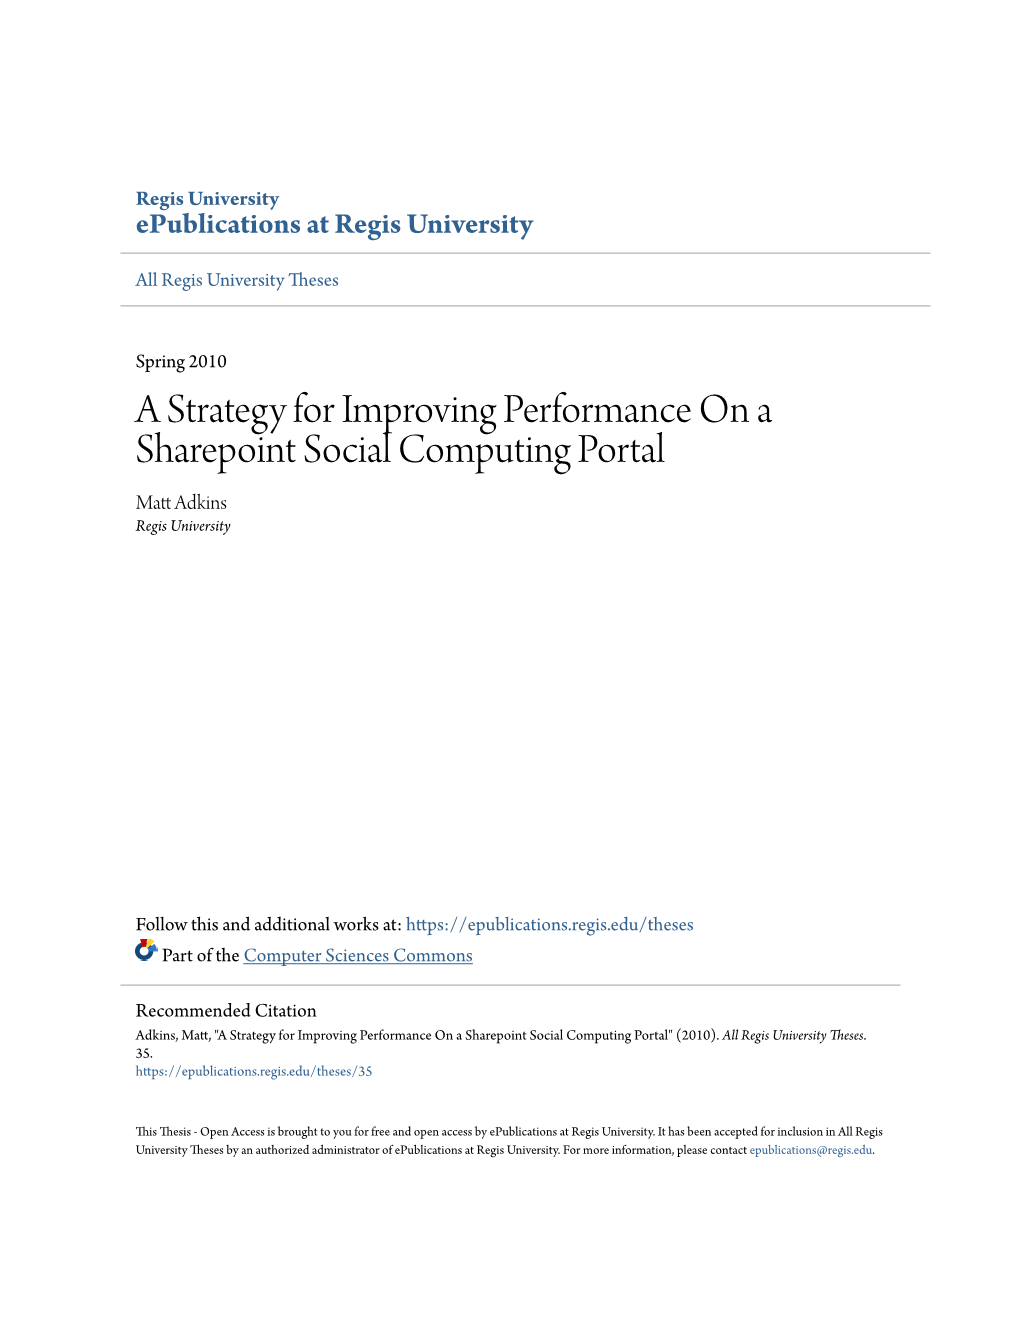 A Strategy for Improving Performance on a Sharepoint Social Computing Portal Matt Adkins Regis University